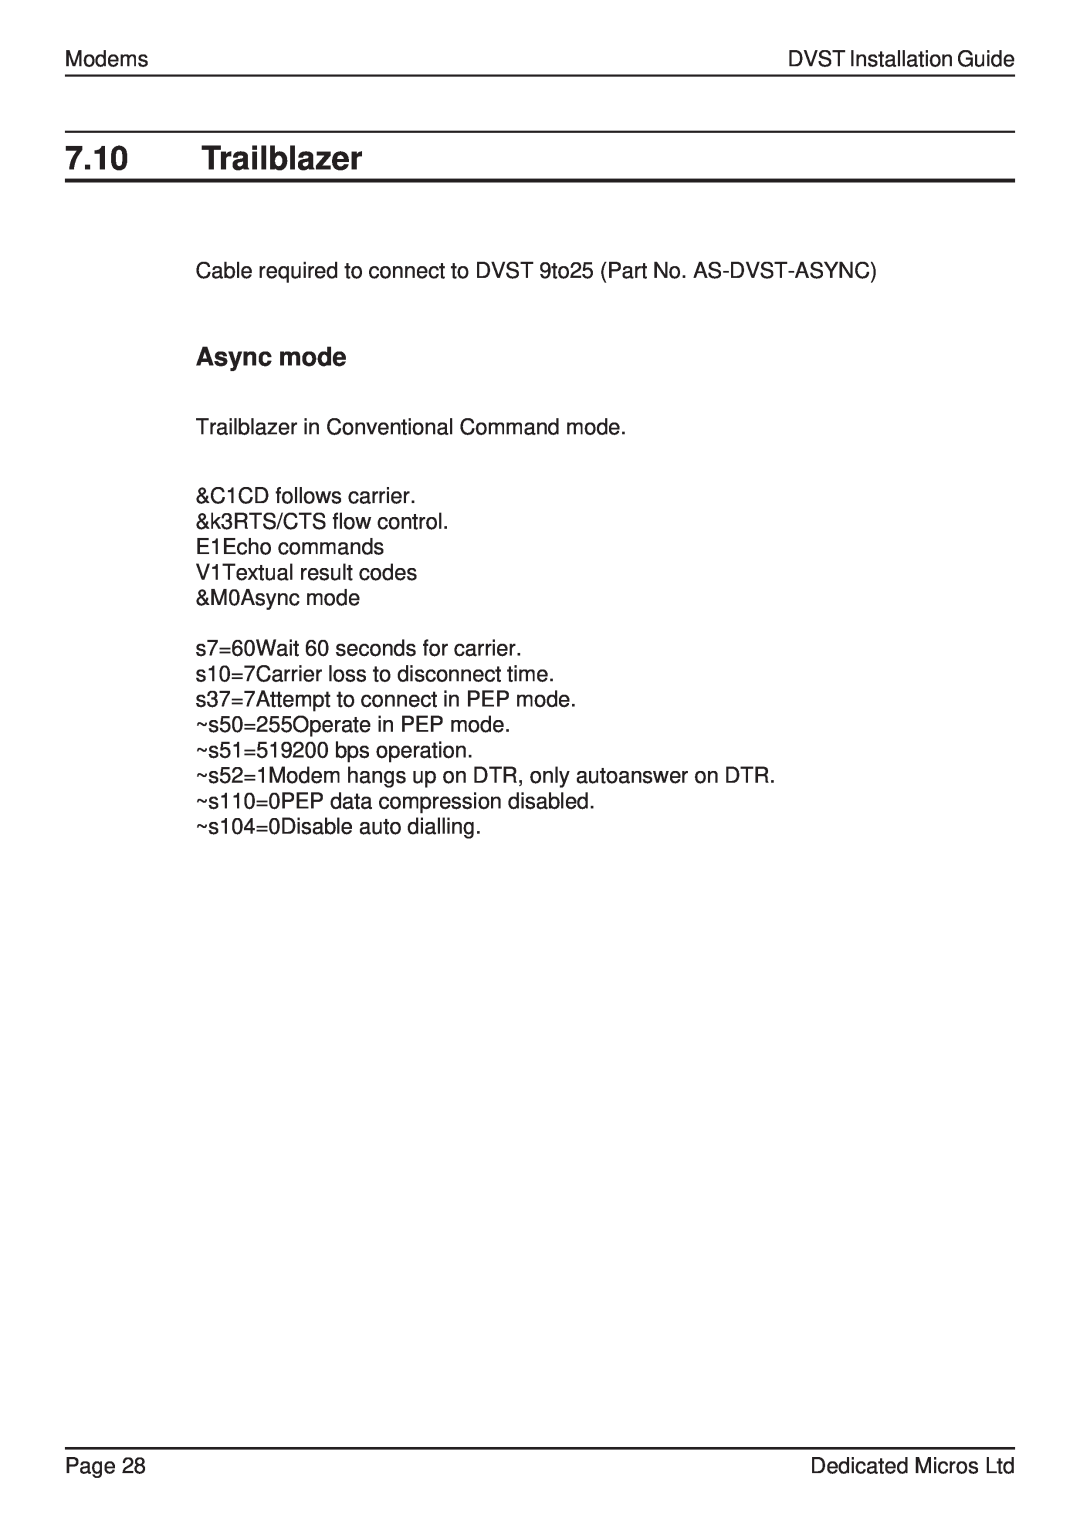 Guardian Technologies DVST, DFT 150/175 manual 7.10Trailblazer, Async mode 